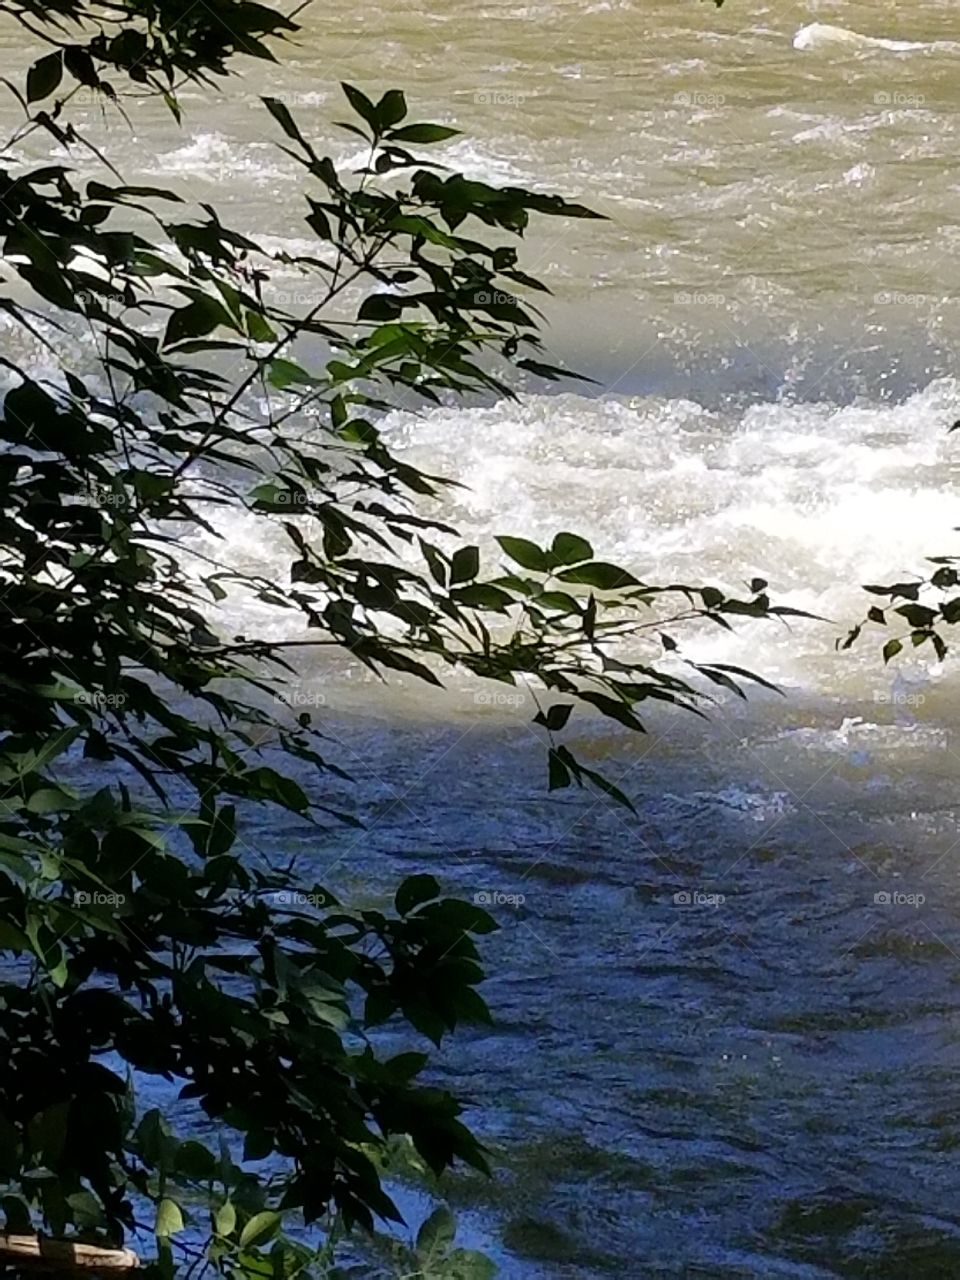 Riverside 
Chattahoohee River